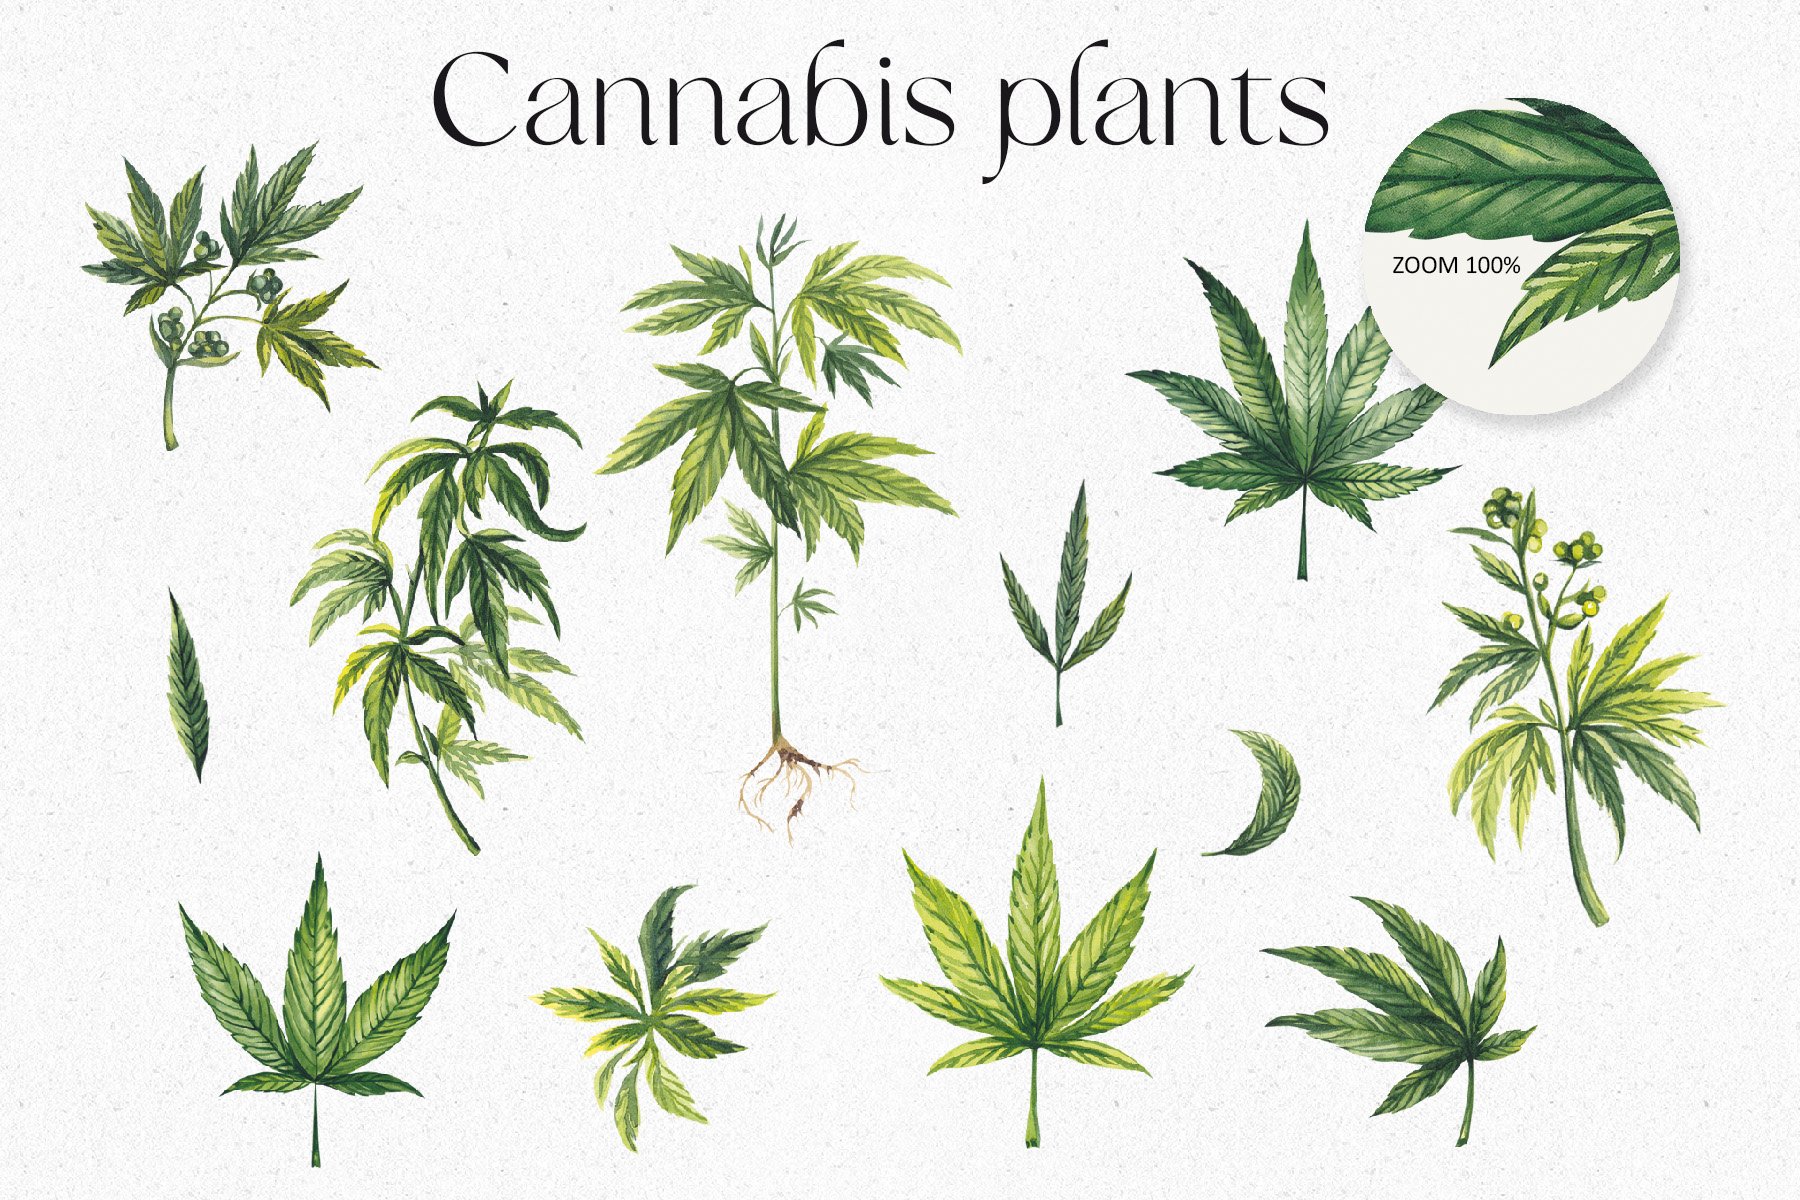 Cannabis plants Cover.